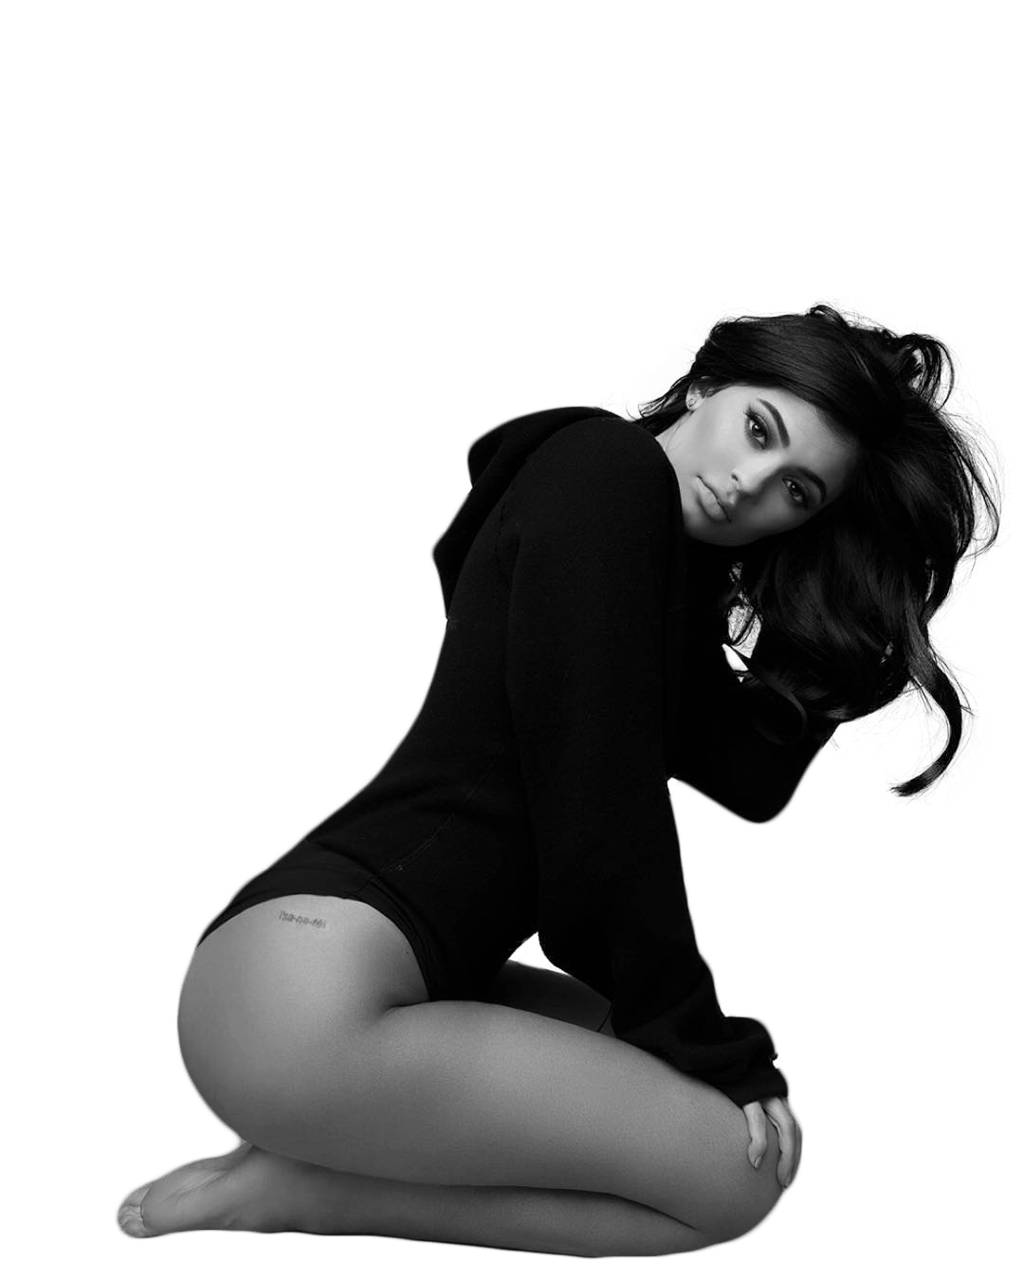 Kylie Jenner Sitting